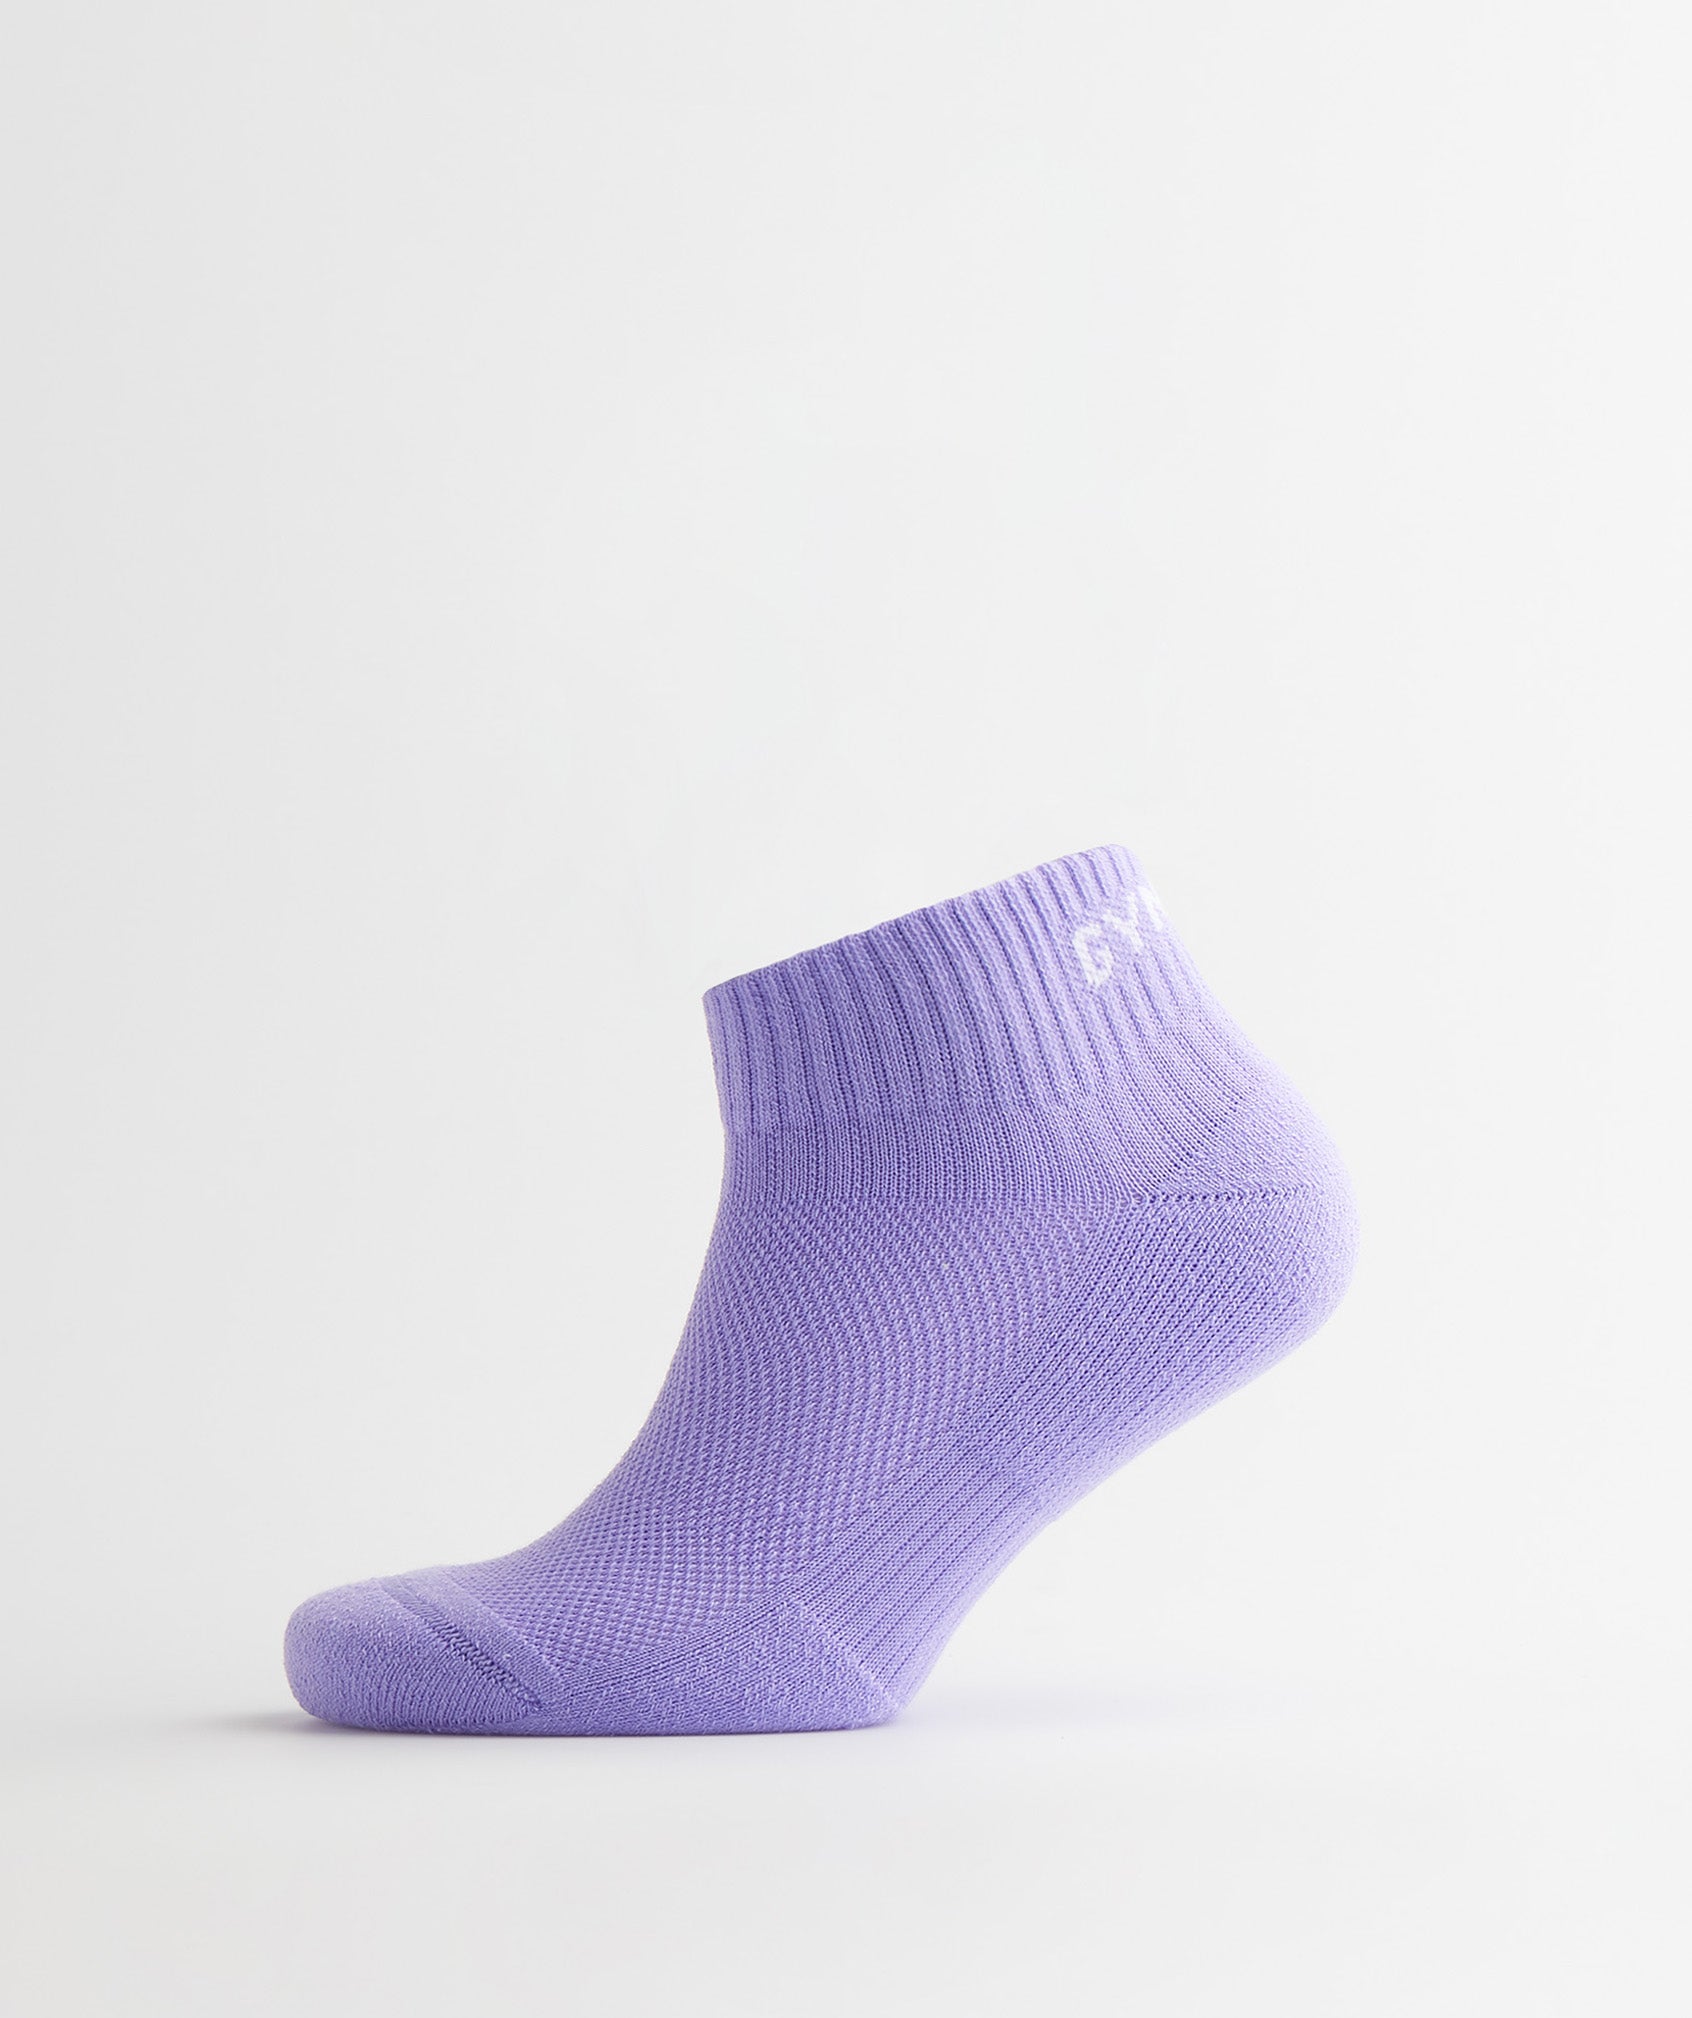 Jacquard Quarter Socks 3Pk in Aqua Blue/Digital Violet/Meridian Blue - view 7